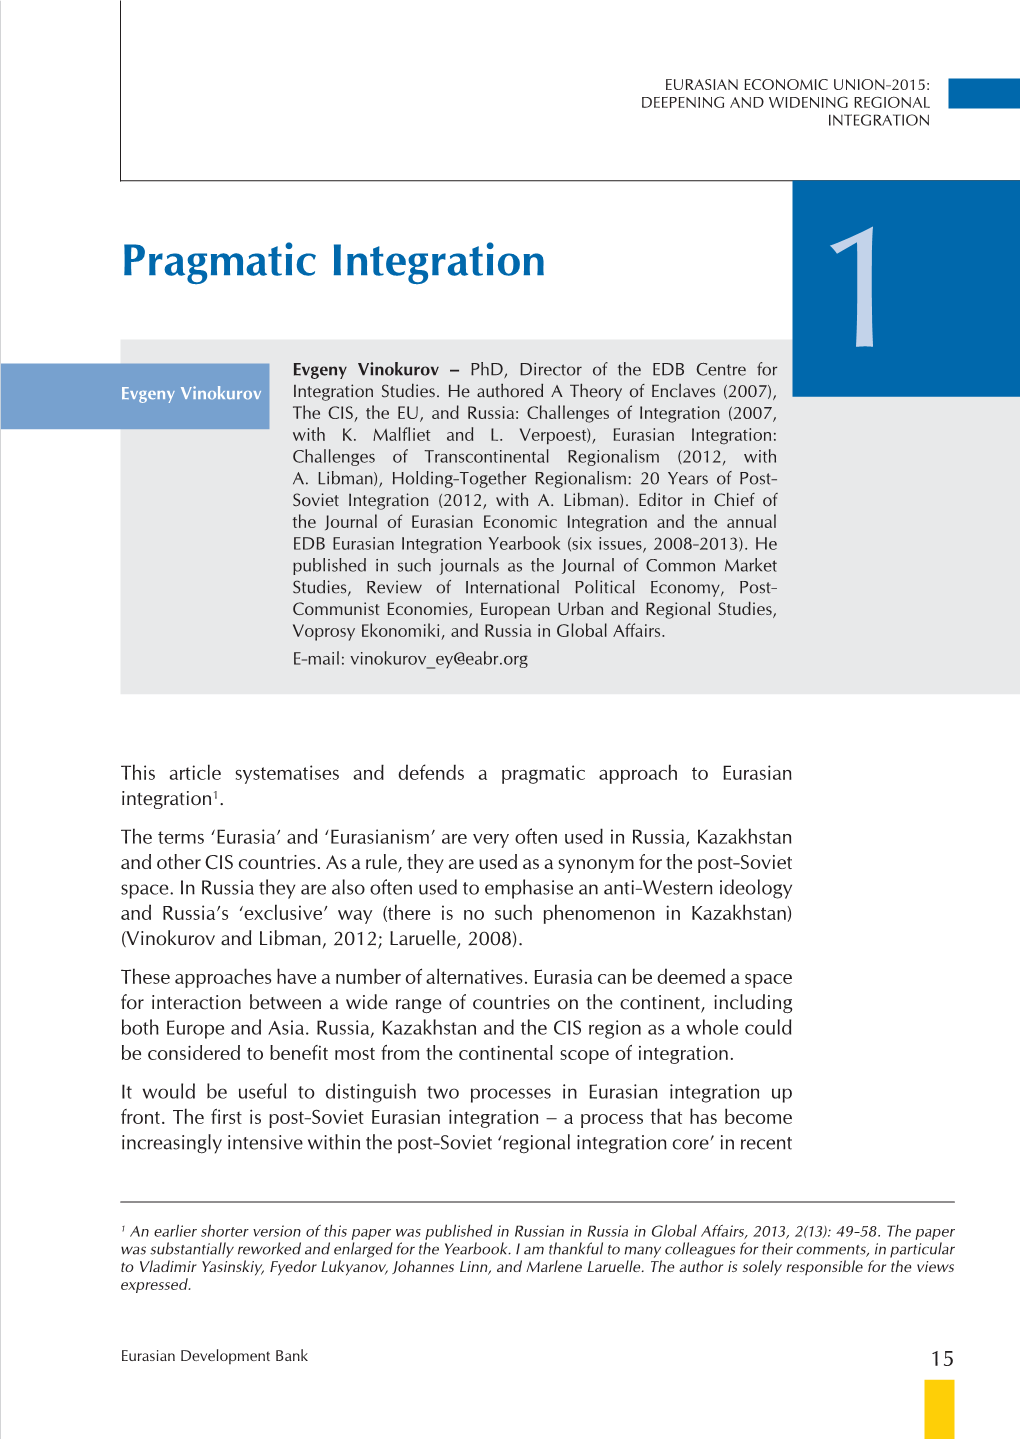 Pragmatic Integration